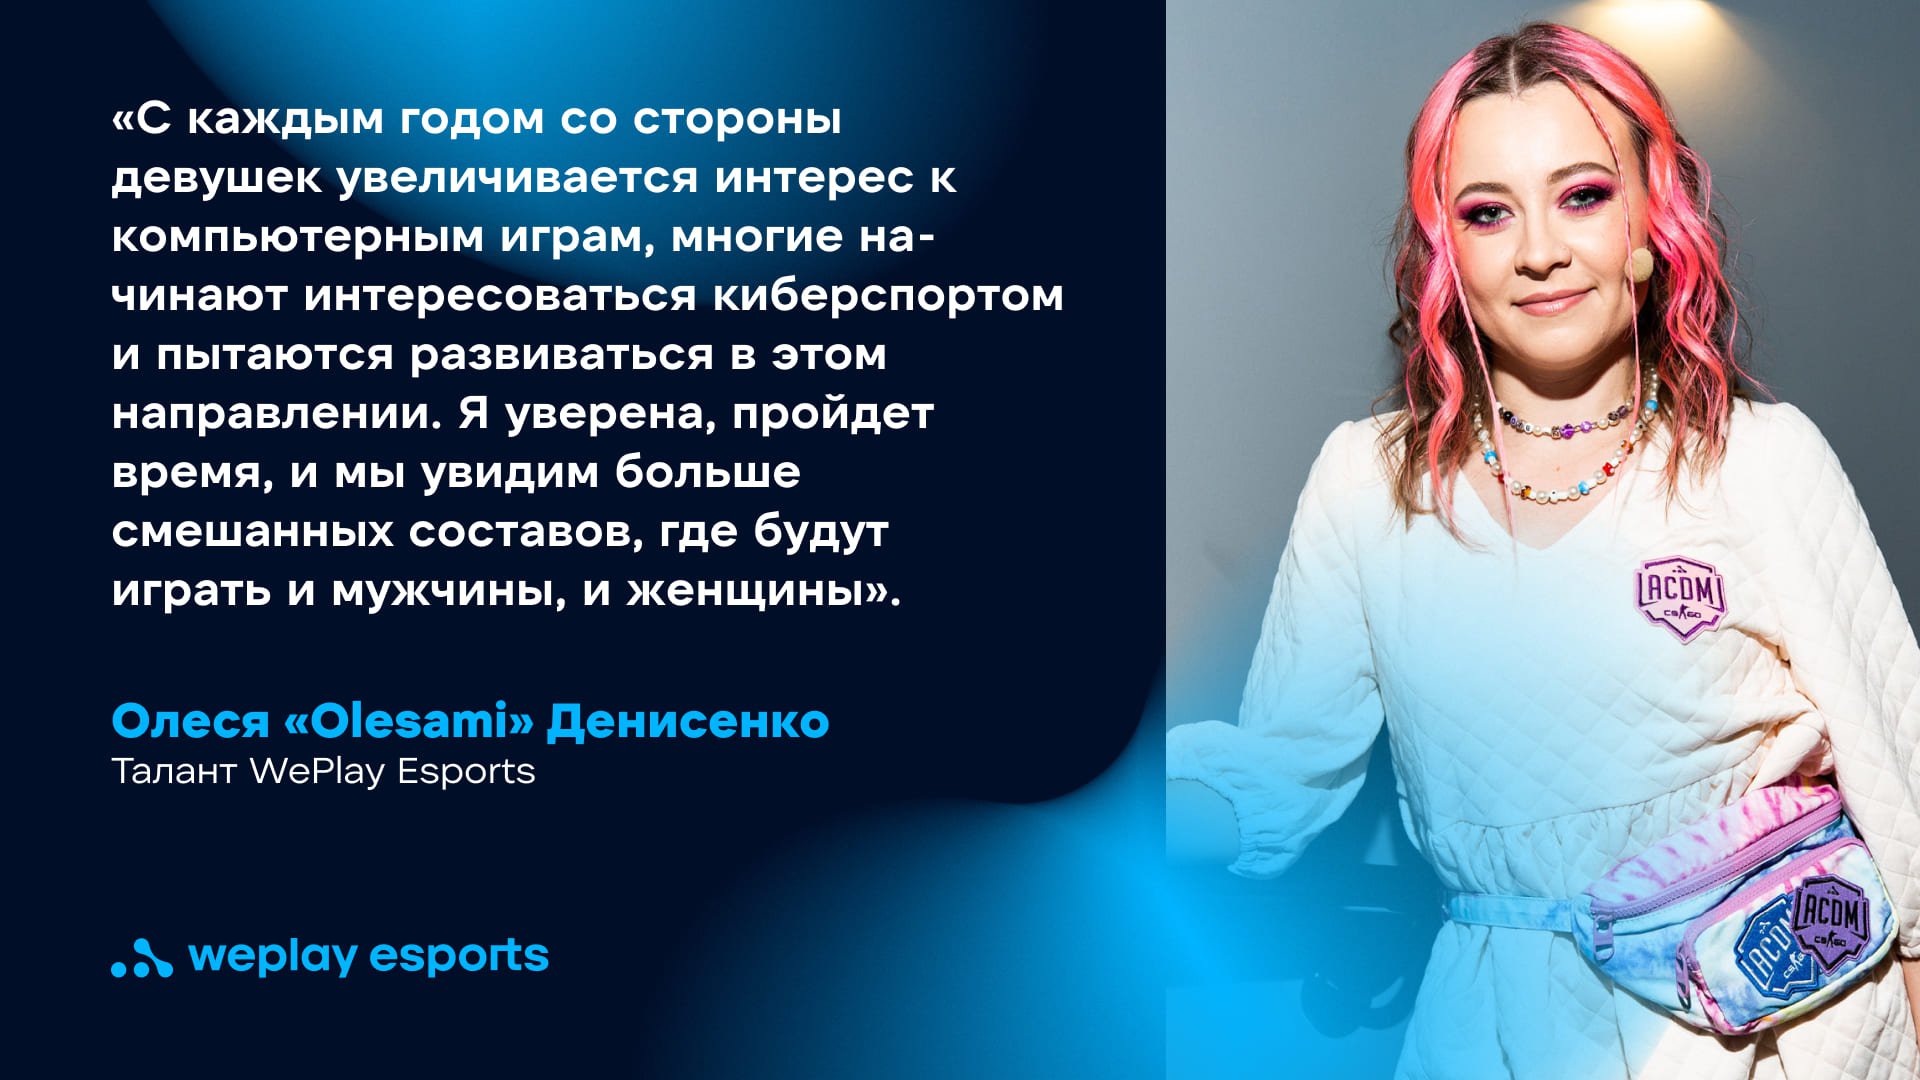 Олеся «Olesami» Денисенко, талант WePlay Esports. Фото: WePlay Holding